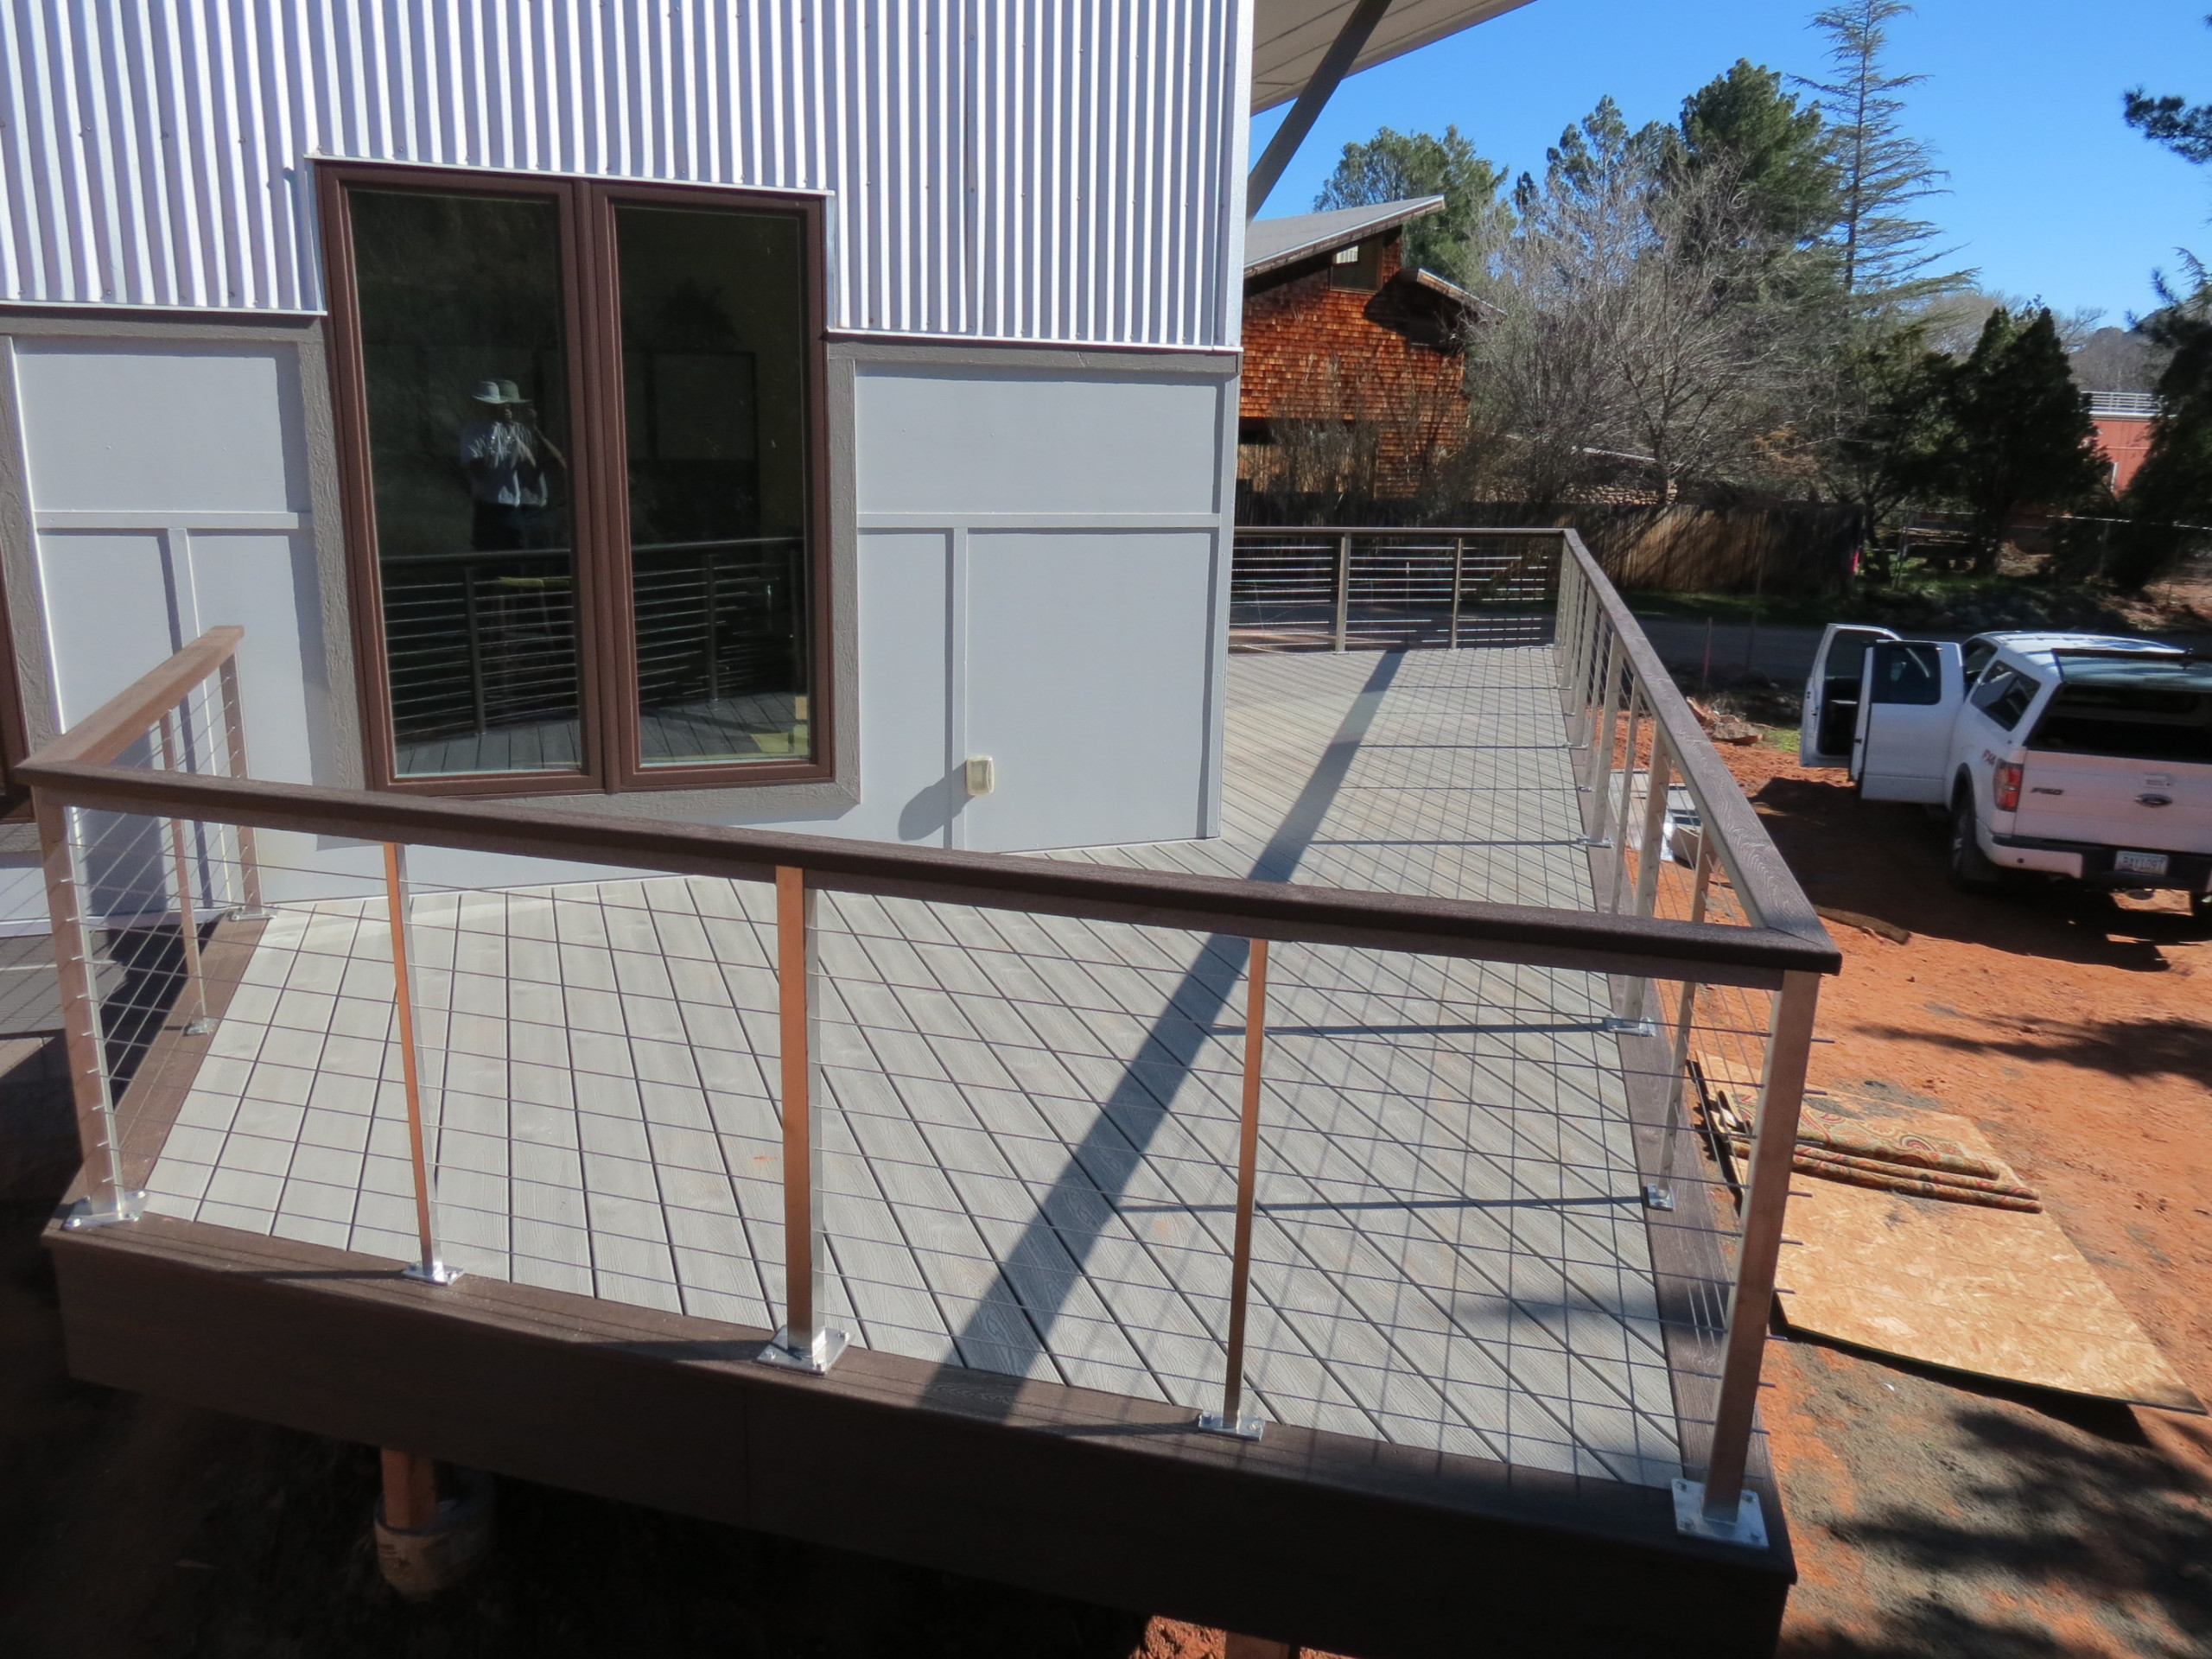 Trex decking and stainless railing - Sedona AZ